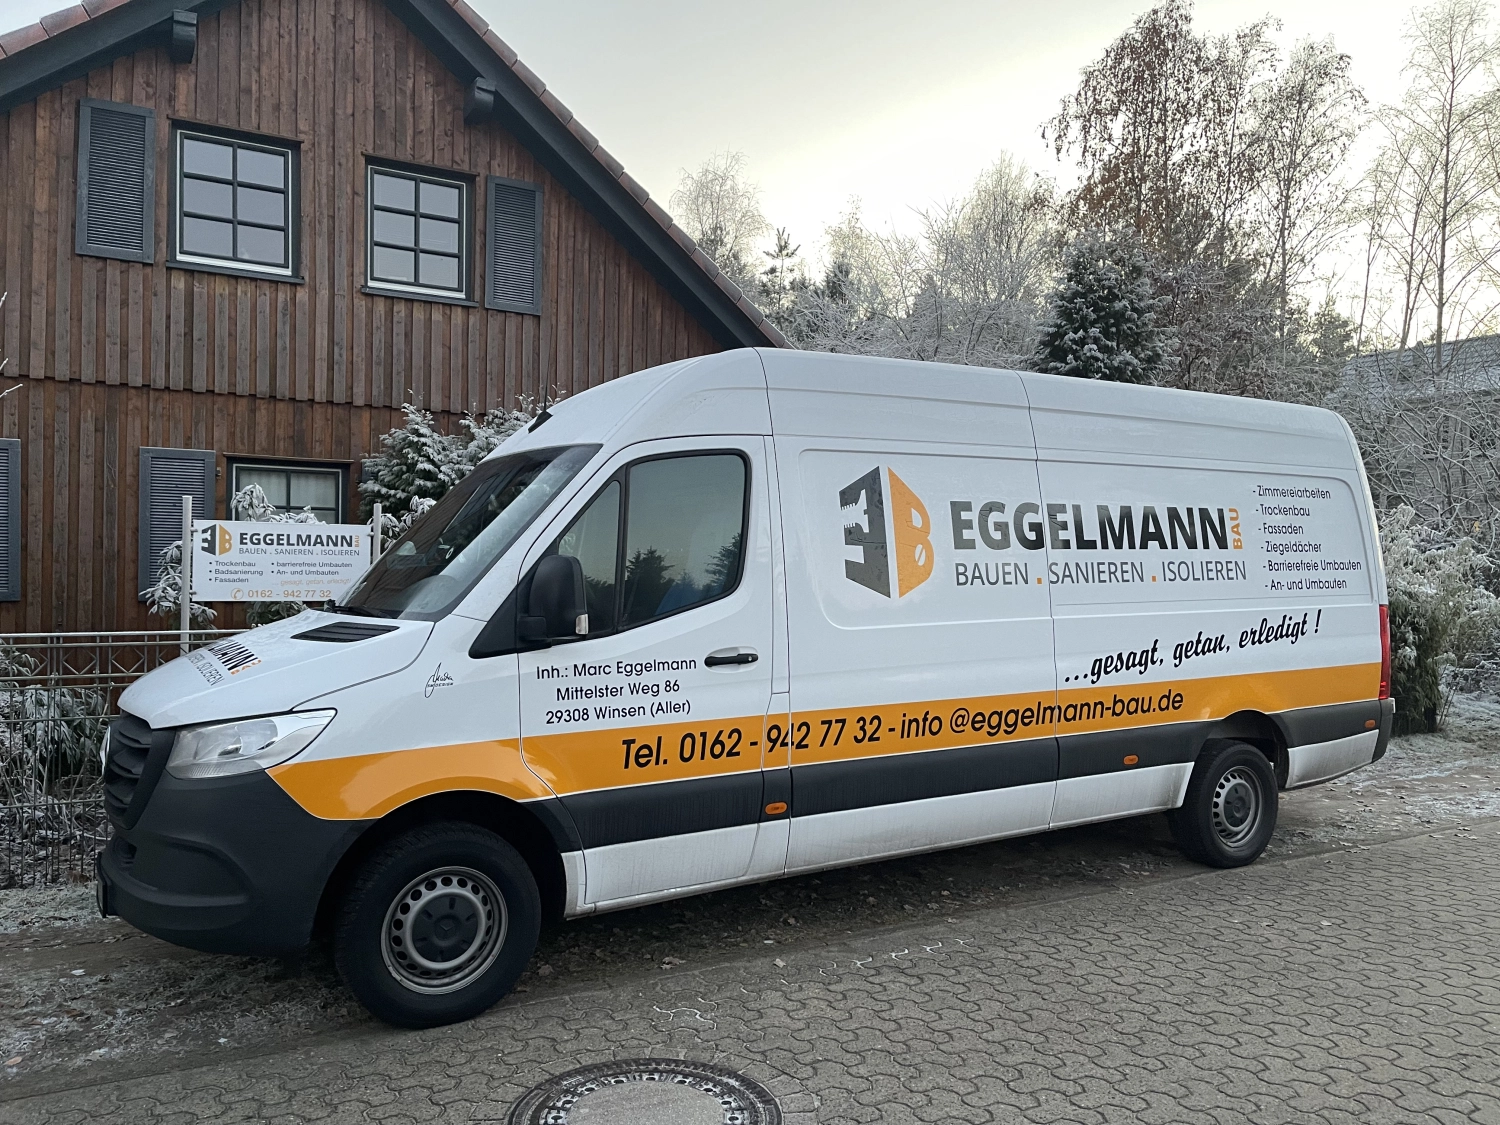 Eggelmann-Bau, Firmenfahrzeug